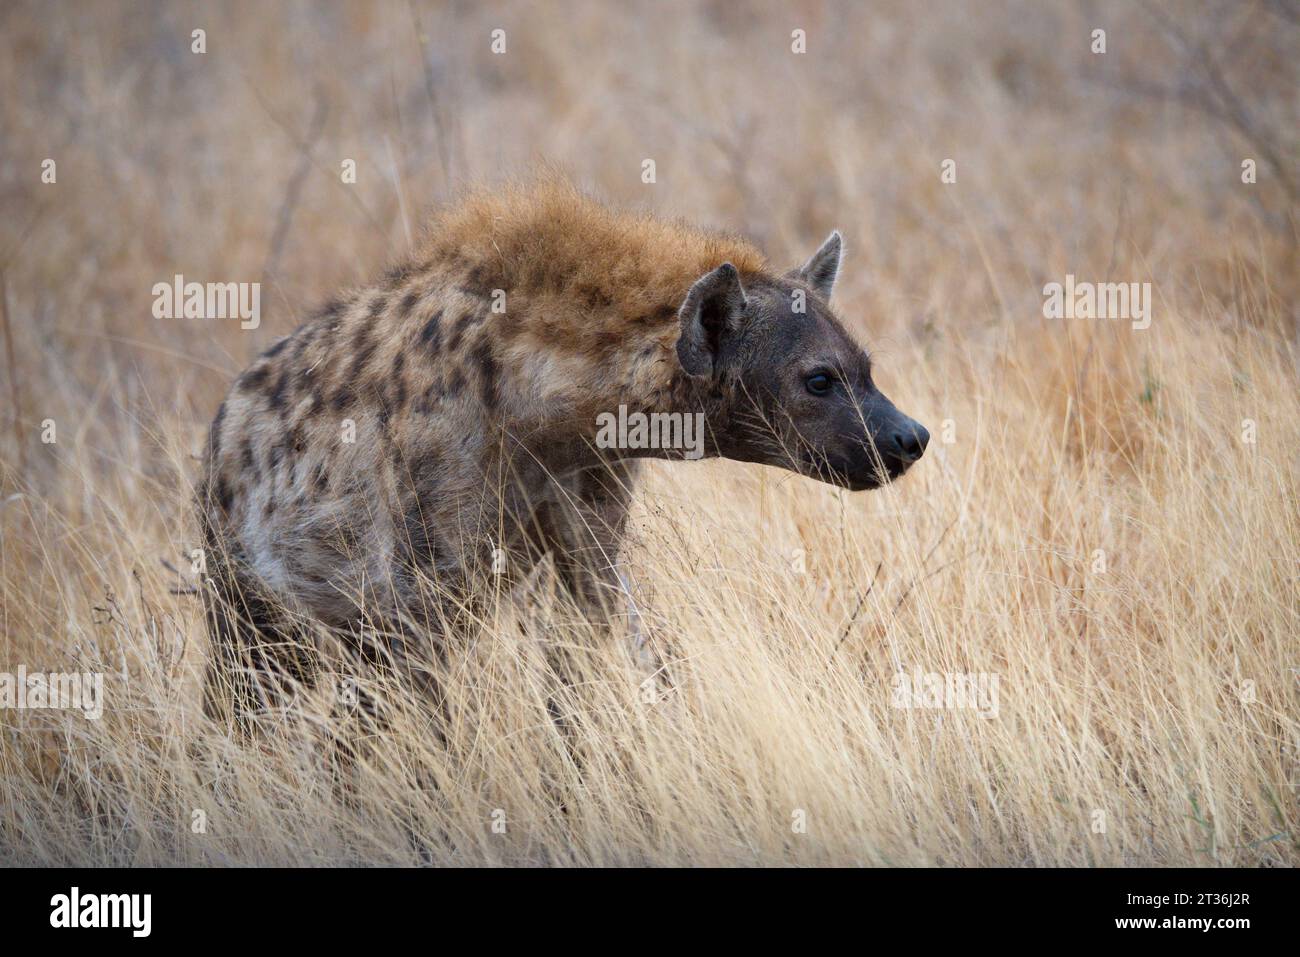 Hyena in savanna. hiena en la sabana Stock Photo